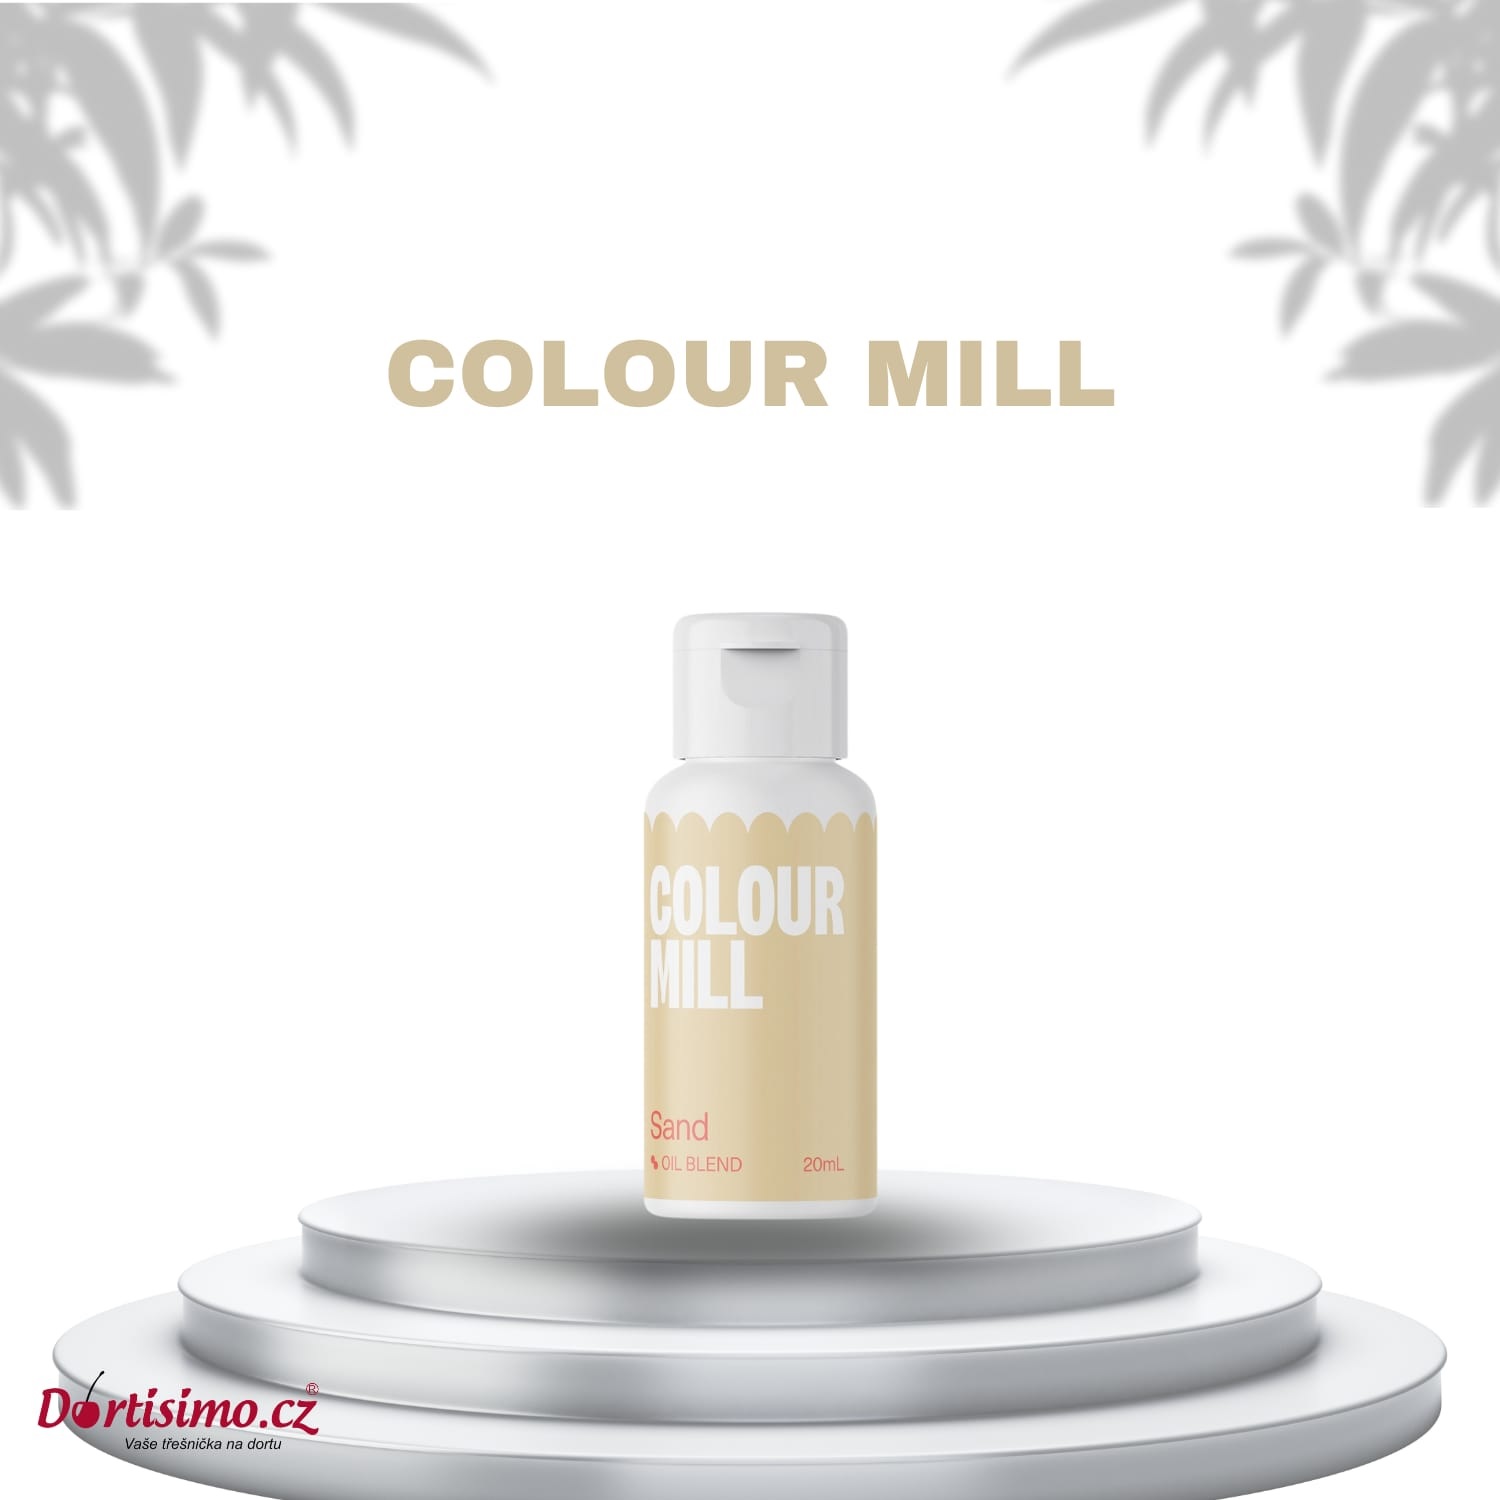 Obrázek k výrobku 23707 - Colour Mill olejová farba Sand (20ml)